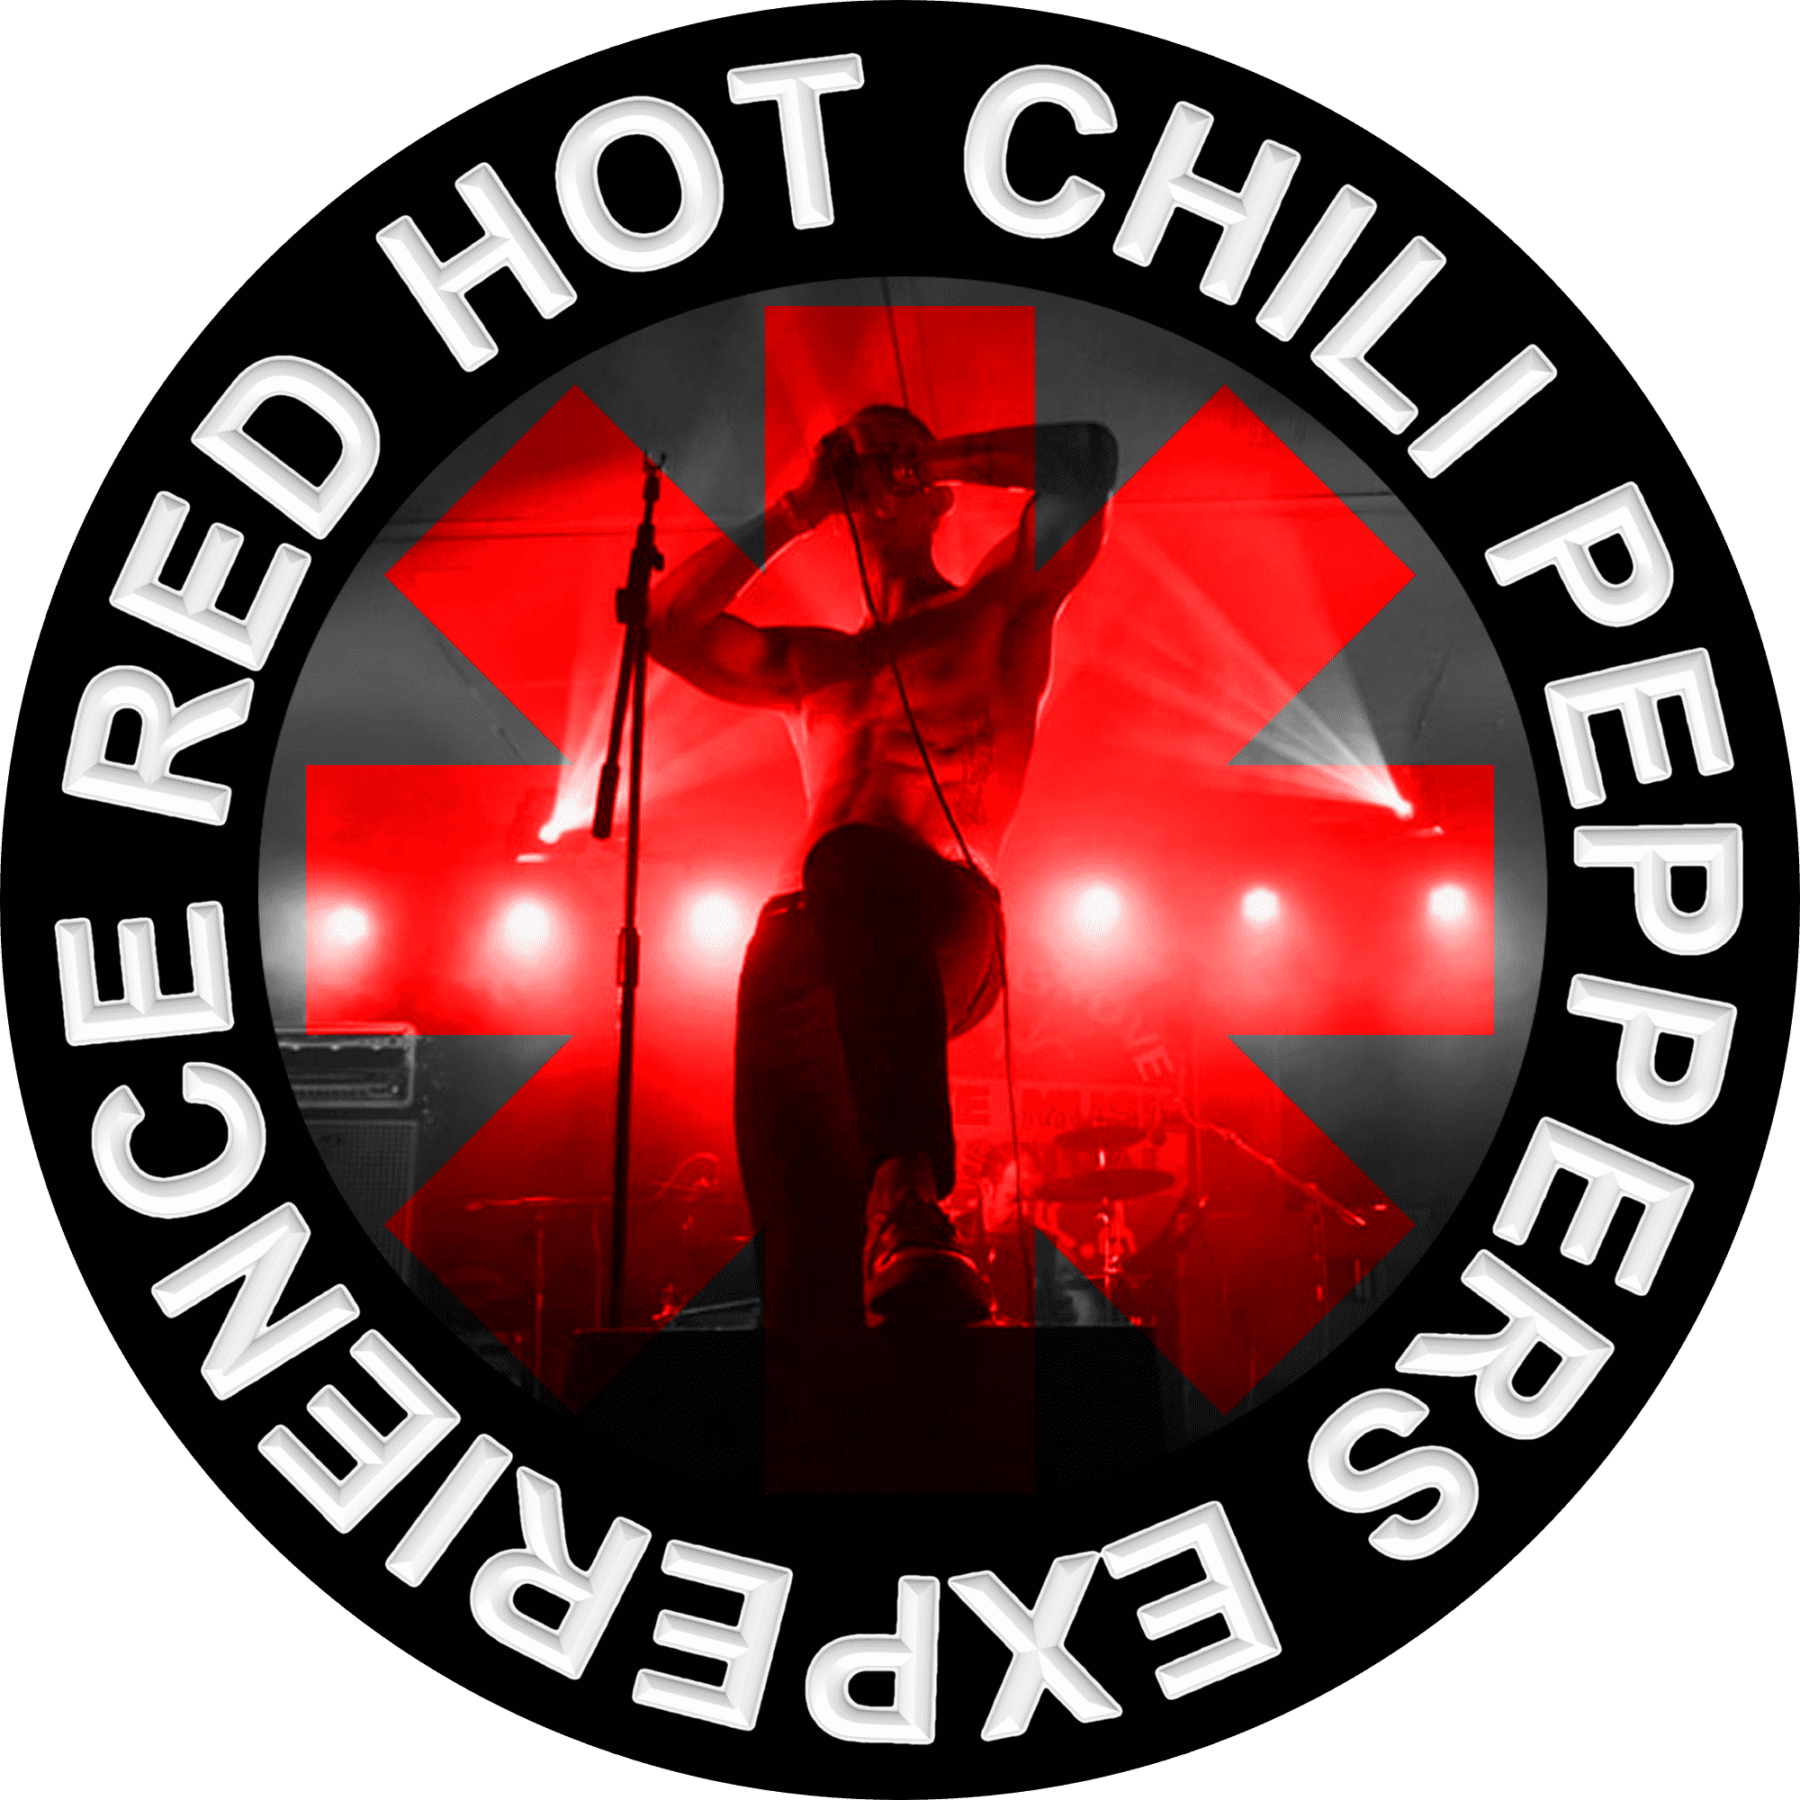 Chili peppers mp3. Red hot Chili Peppers знак. Ред хот Чили Пепперс логотип. RHCP значок. RHCP группа logo.